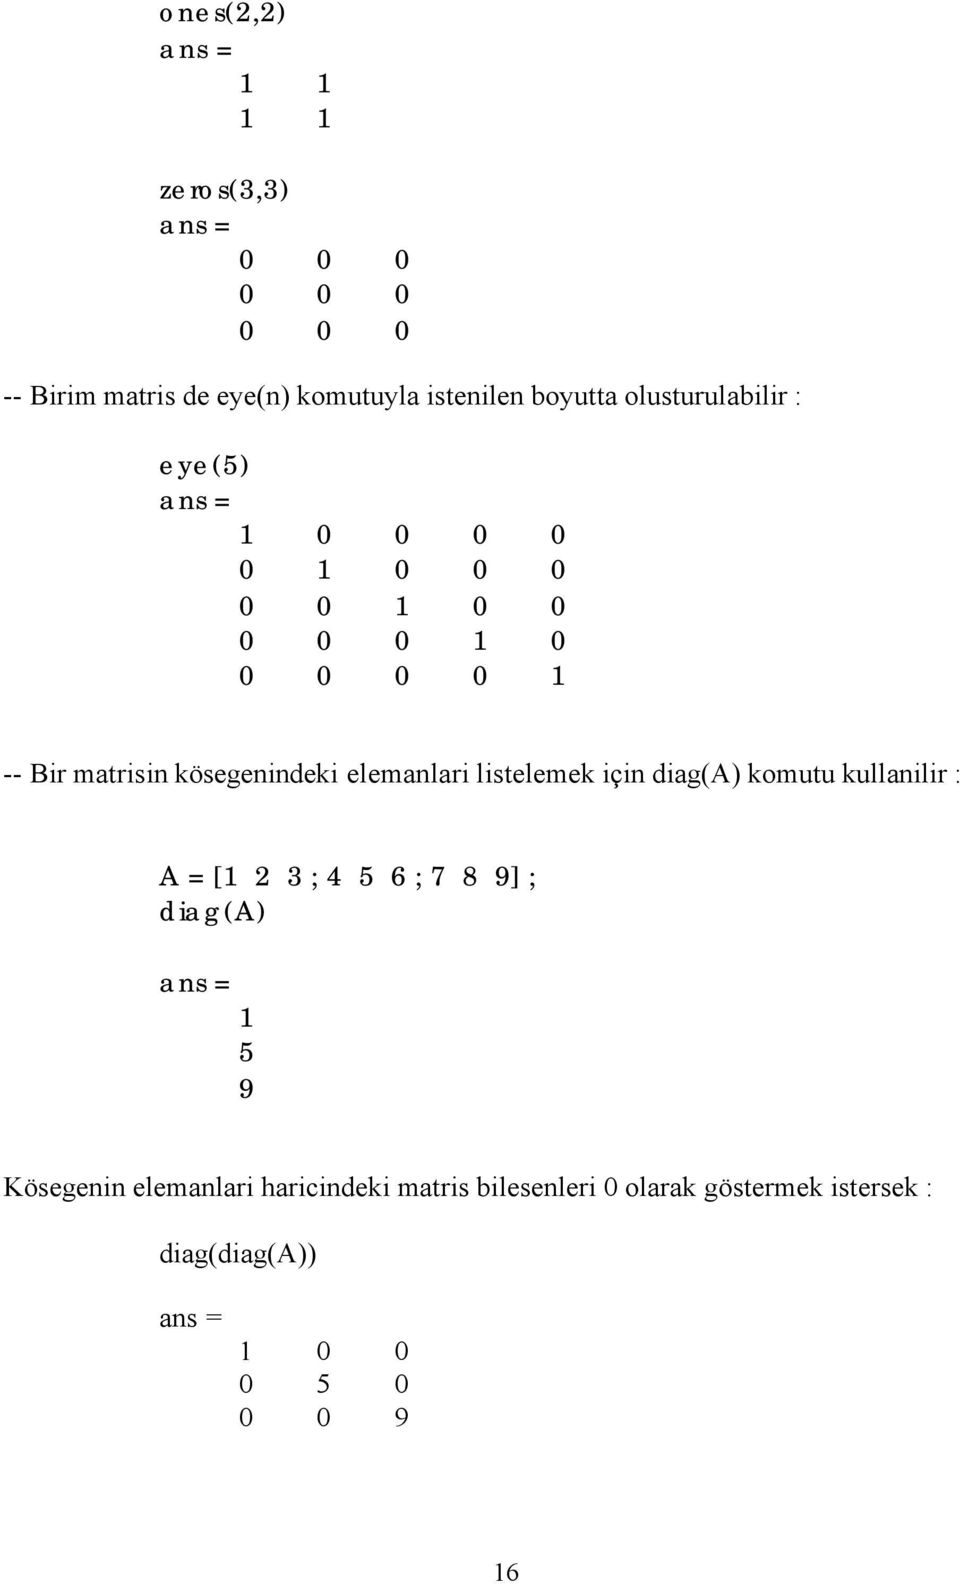 elemanlari listelemek için diag(a) komutu kullanilir : A = [1 2 3 ; 4 5 6 ; 7 8 9] ; diag(a) 1 5 9